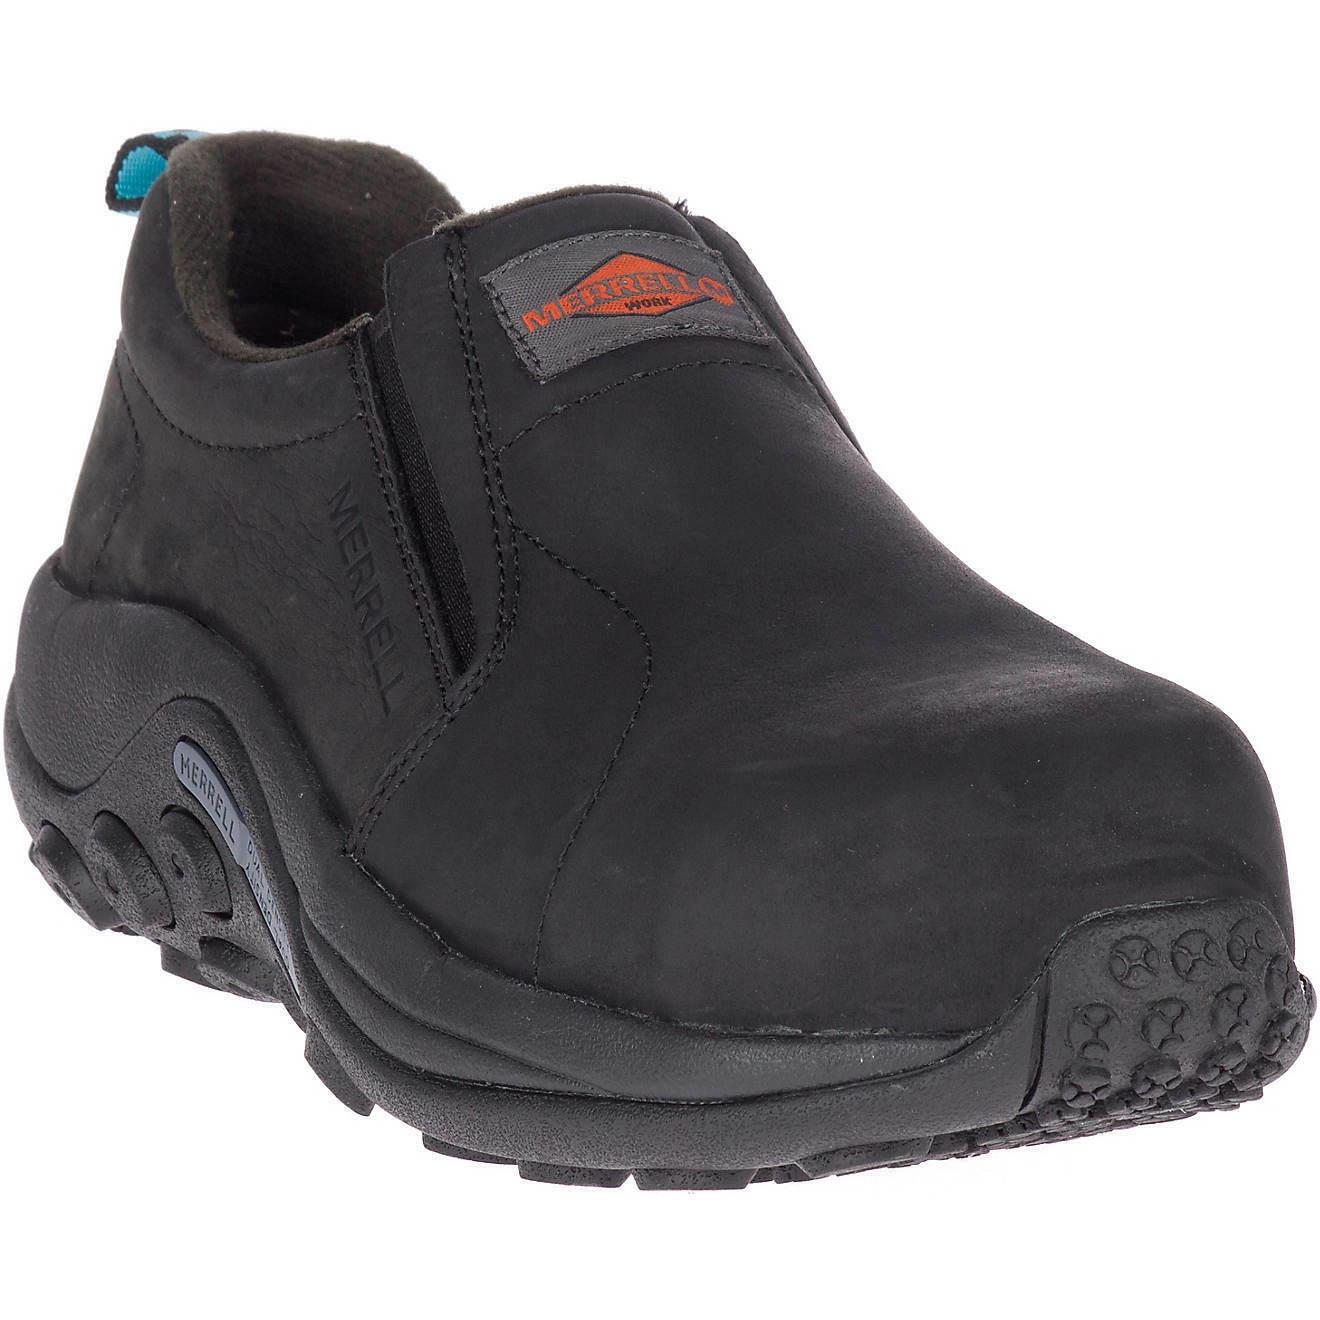 Merrell Women`s Jungle Moc Composite Toe Black Work Shoes N1012 Size 7.5 M